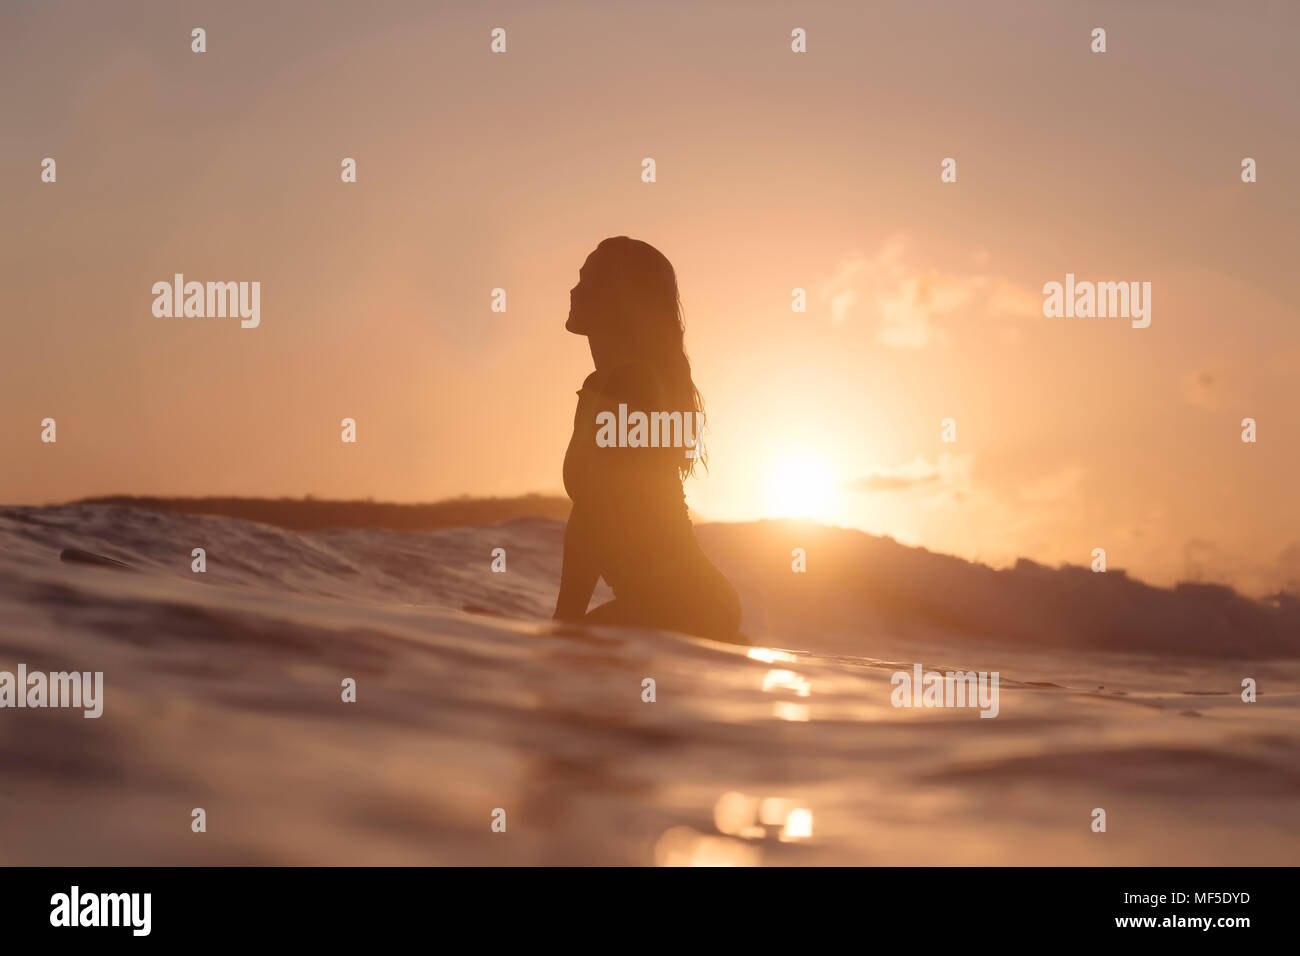 Indonesia, Lombok, female surfer sitting on surfboard at sunset Stock Photo